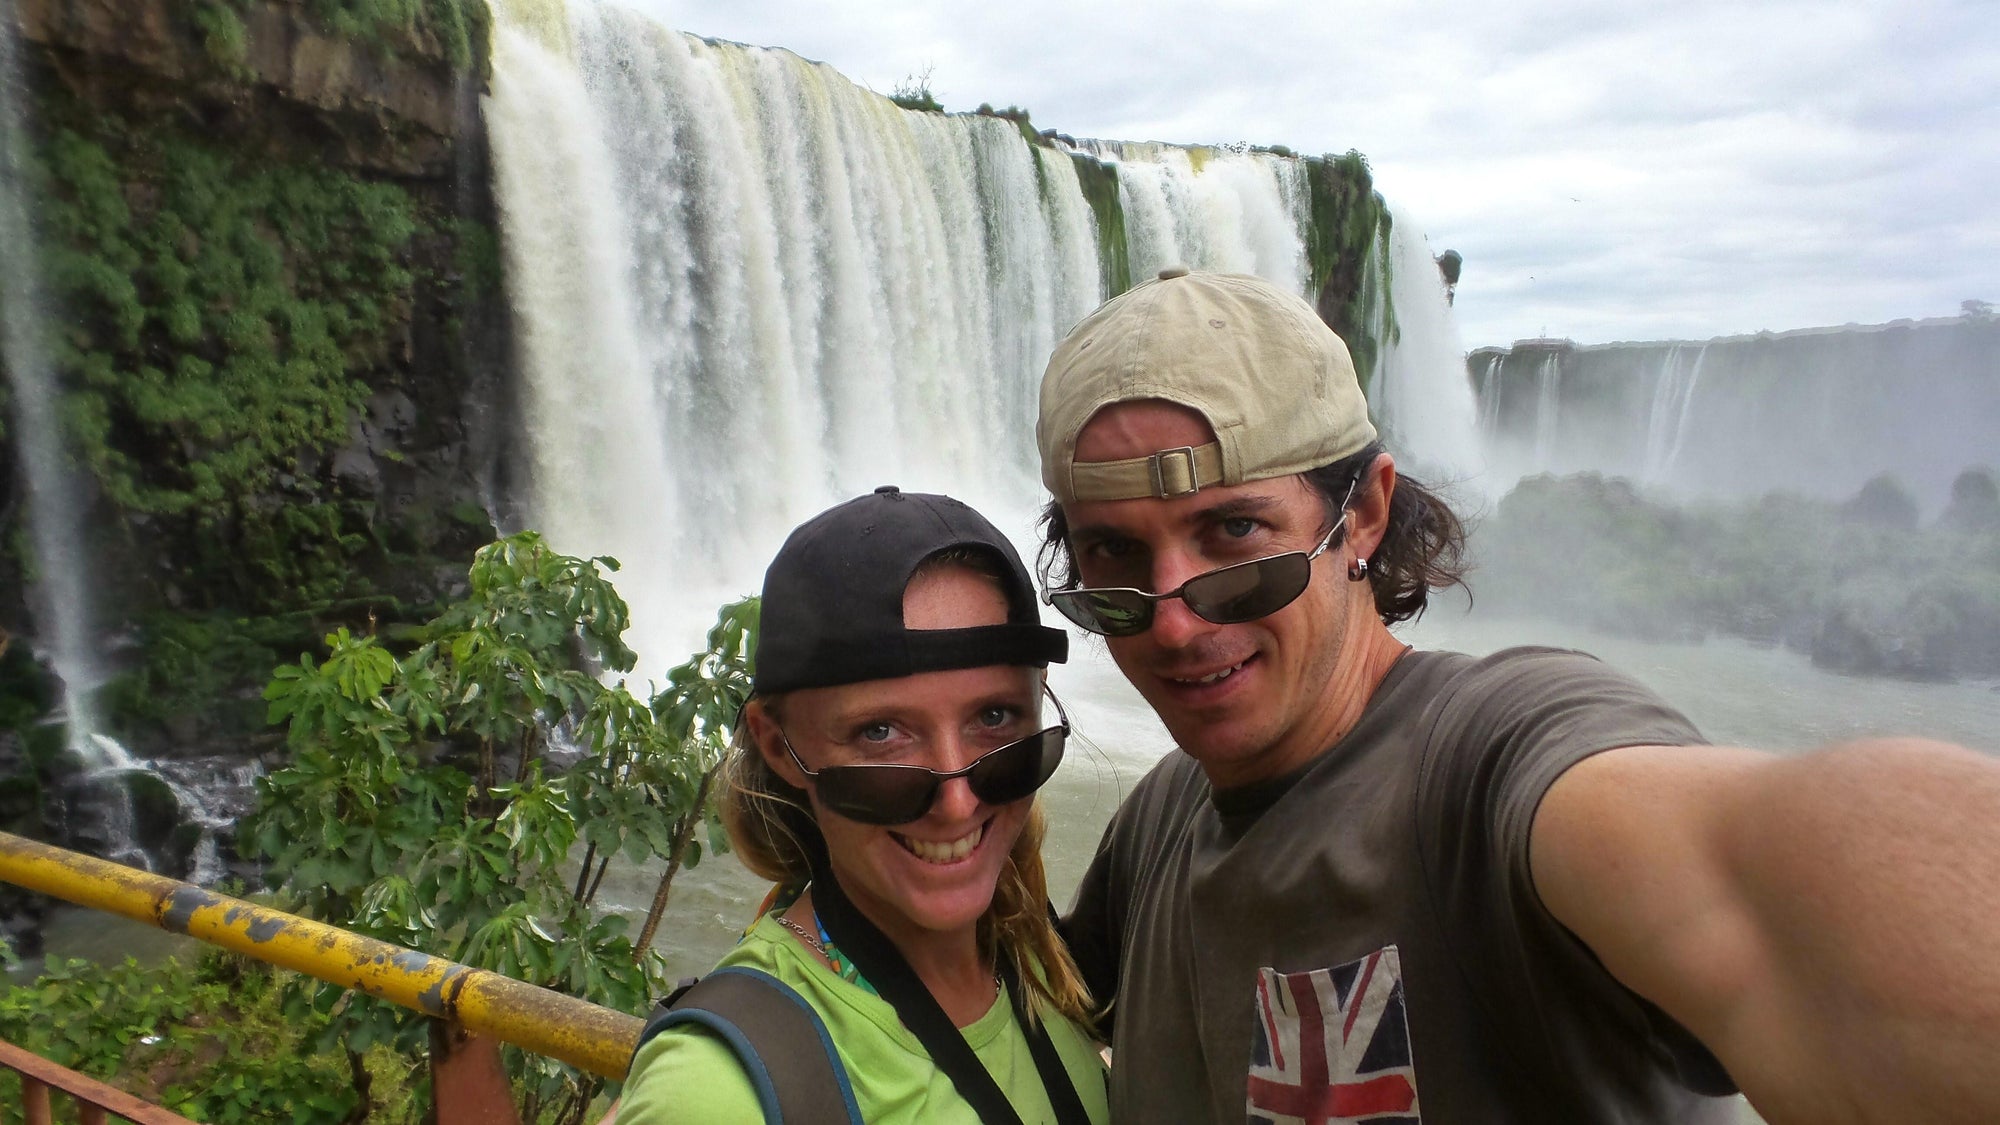 Stu and Janell at Iguazu Falls, Brazil 2015